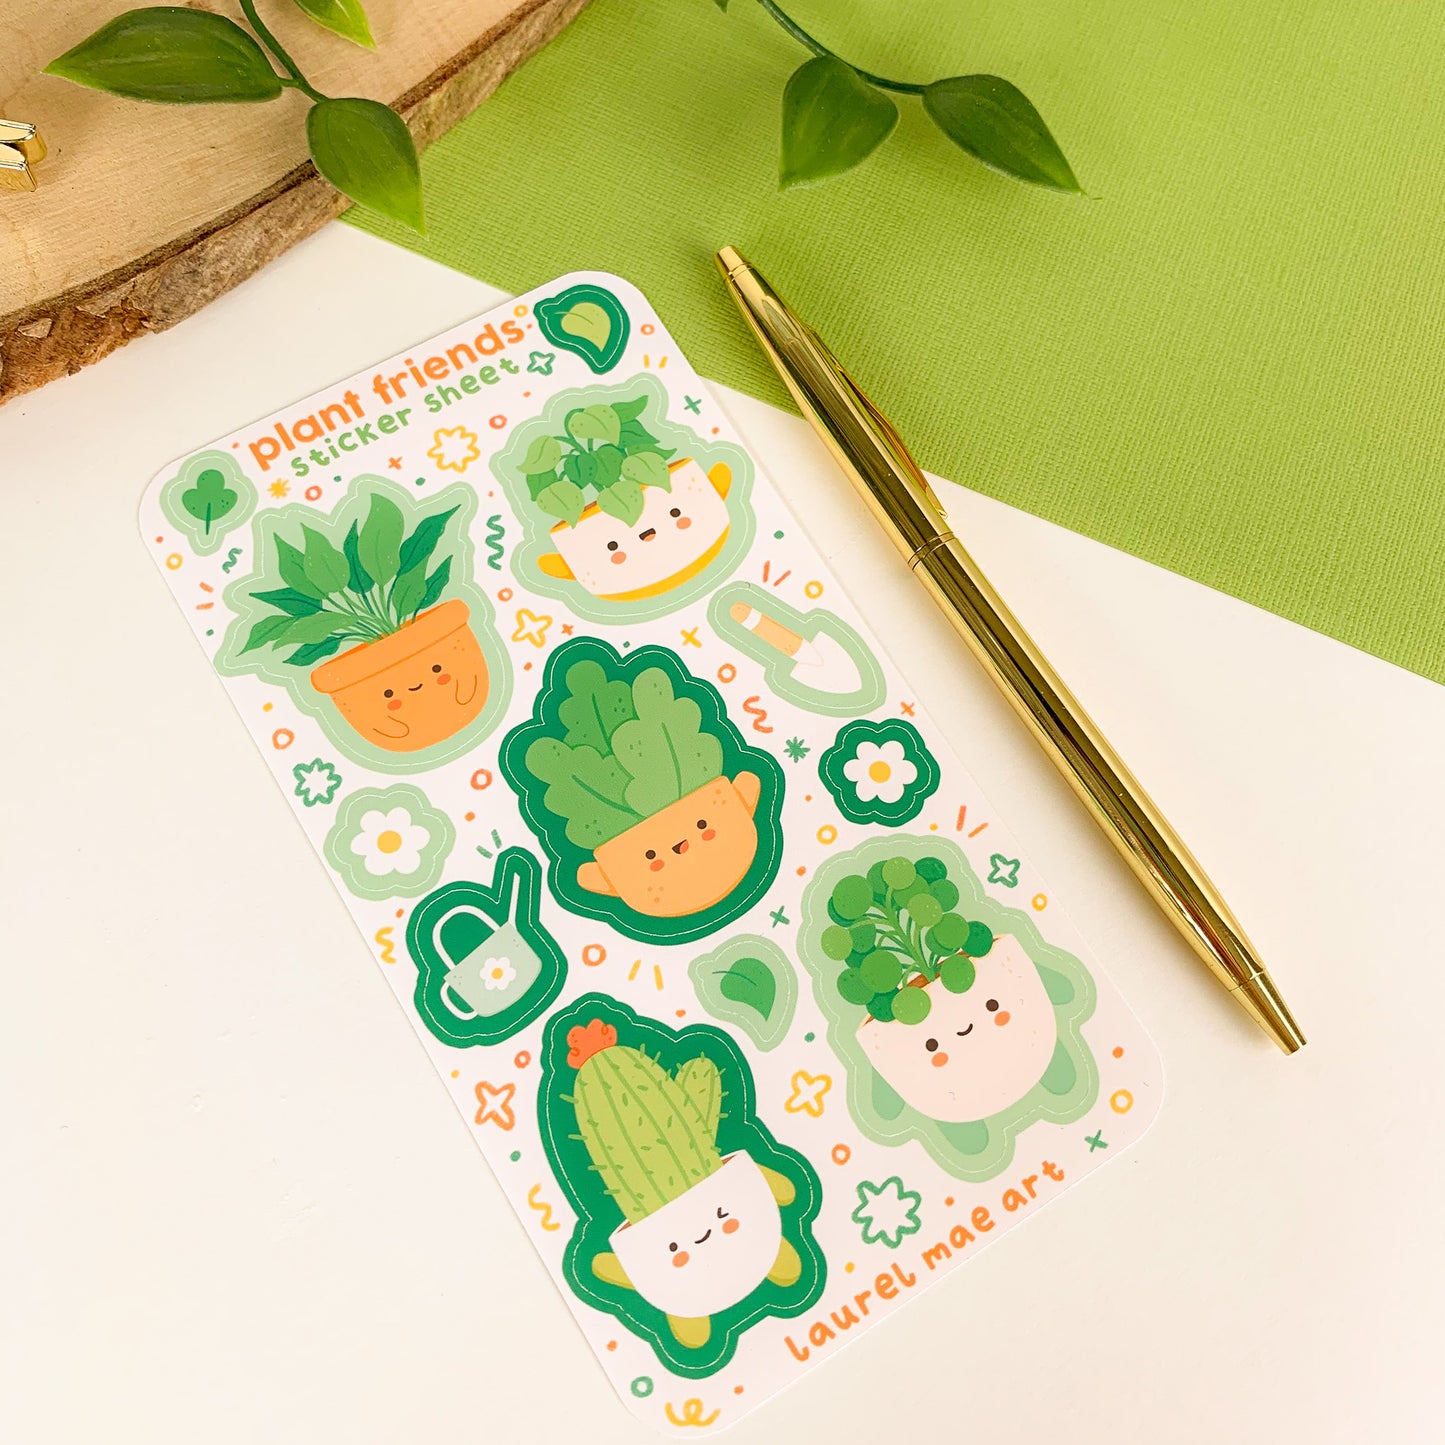 Plant Friends - Sticker Sheet